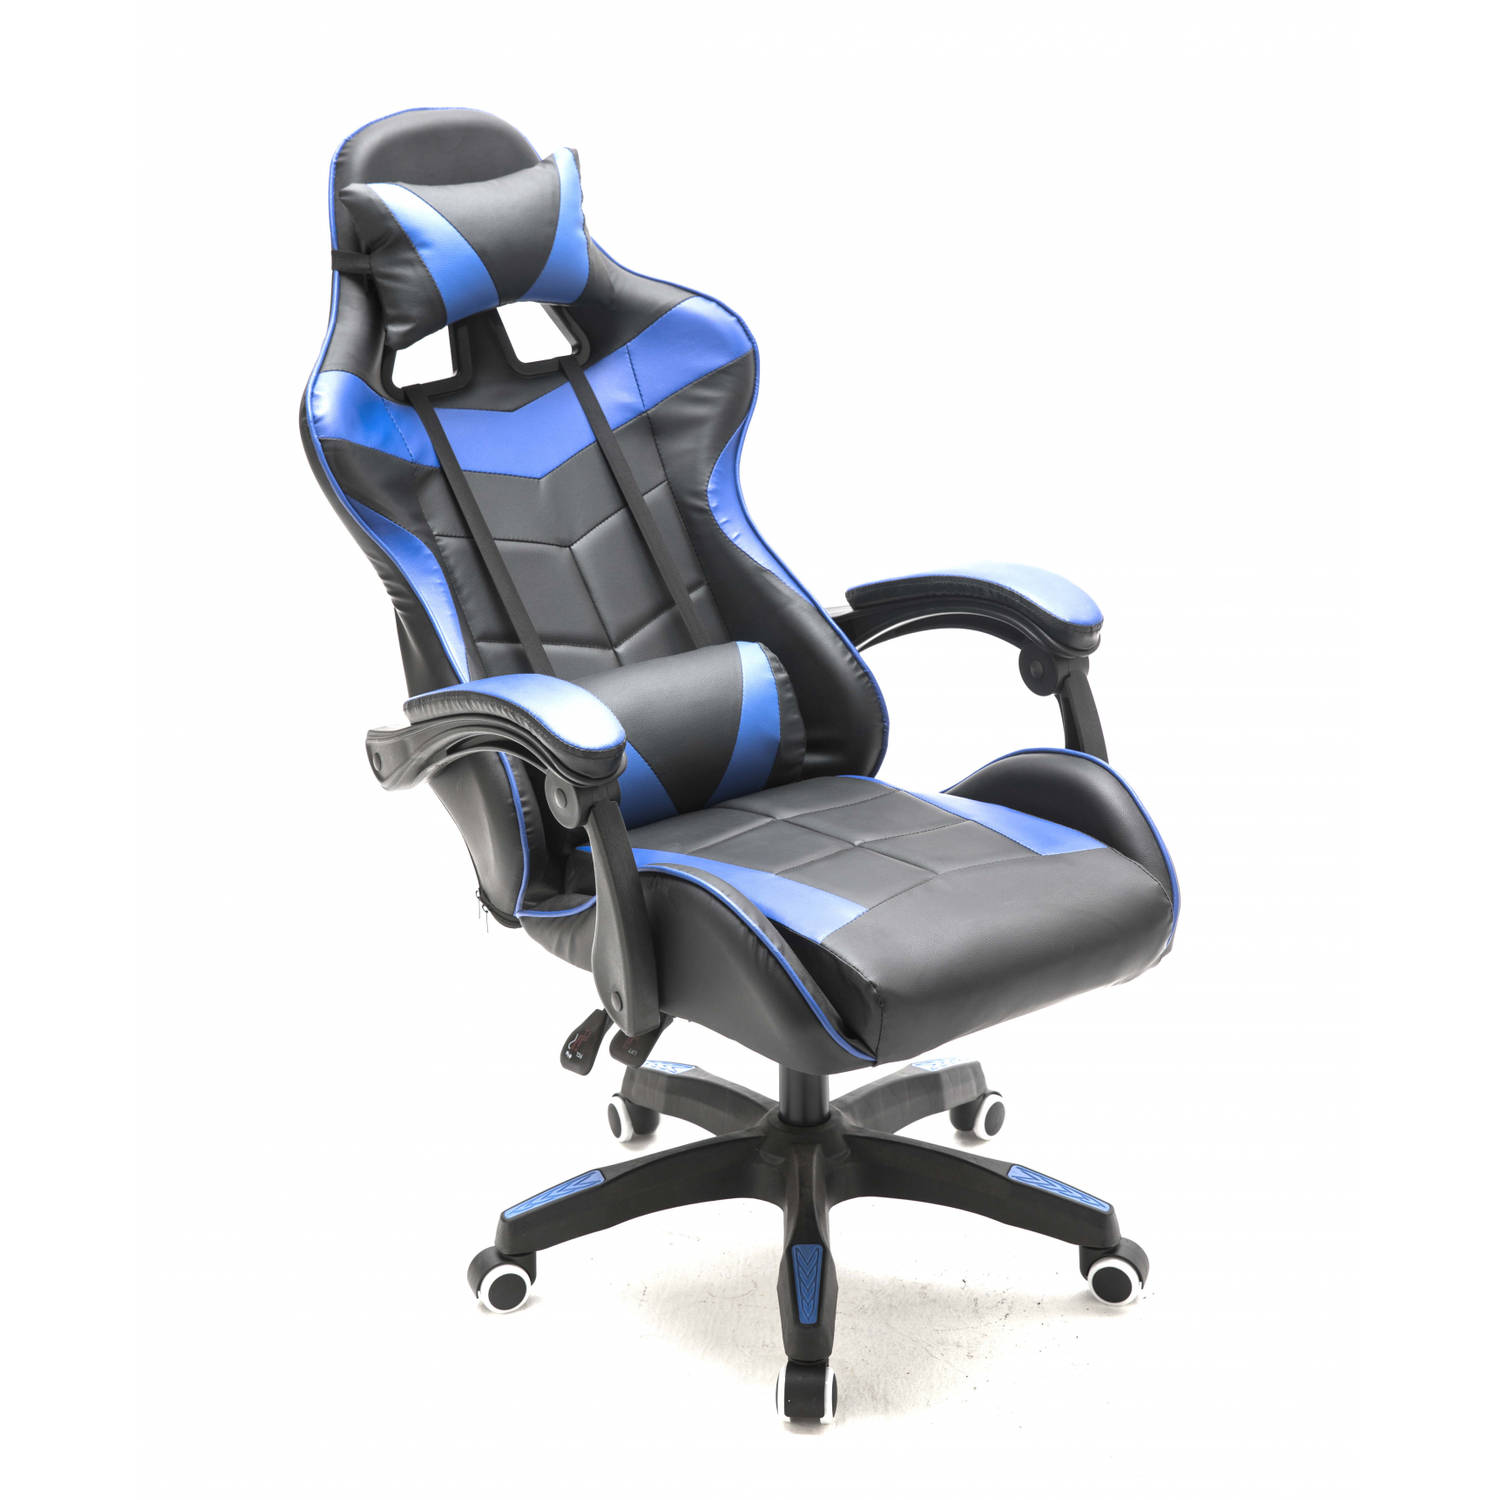 VDD Gamestoel Cyclone tieners - bureaustoel - racing gaming stoel - blauw zwart